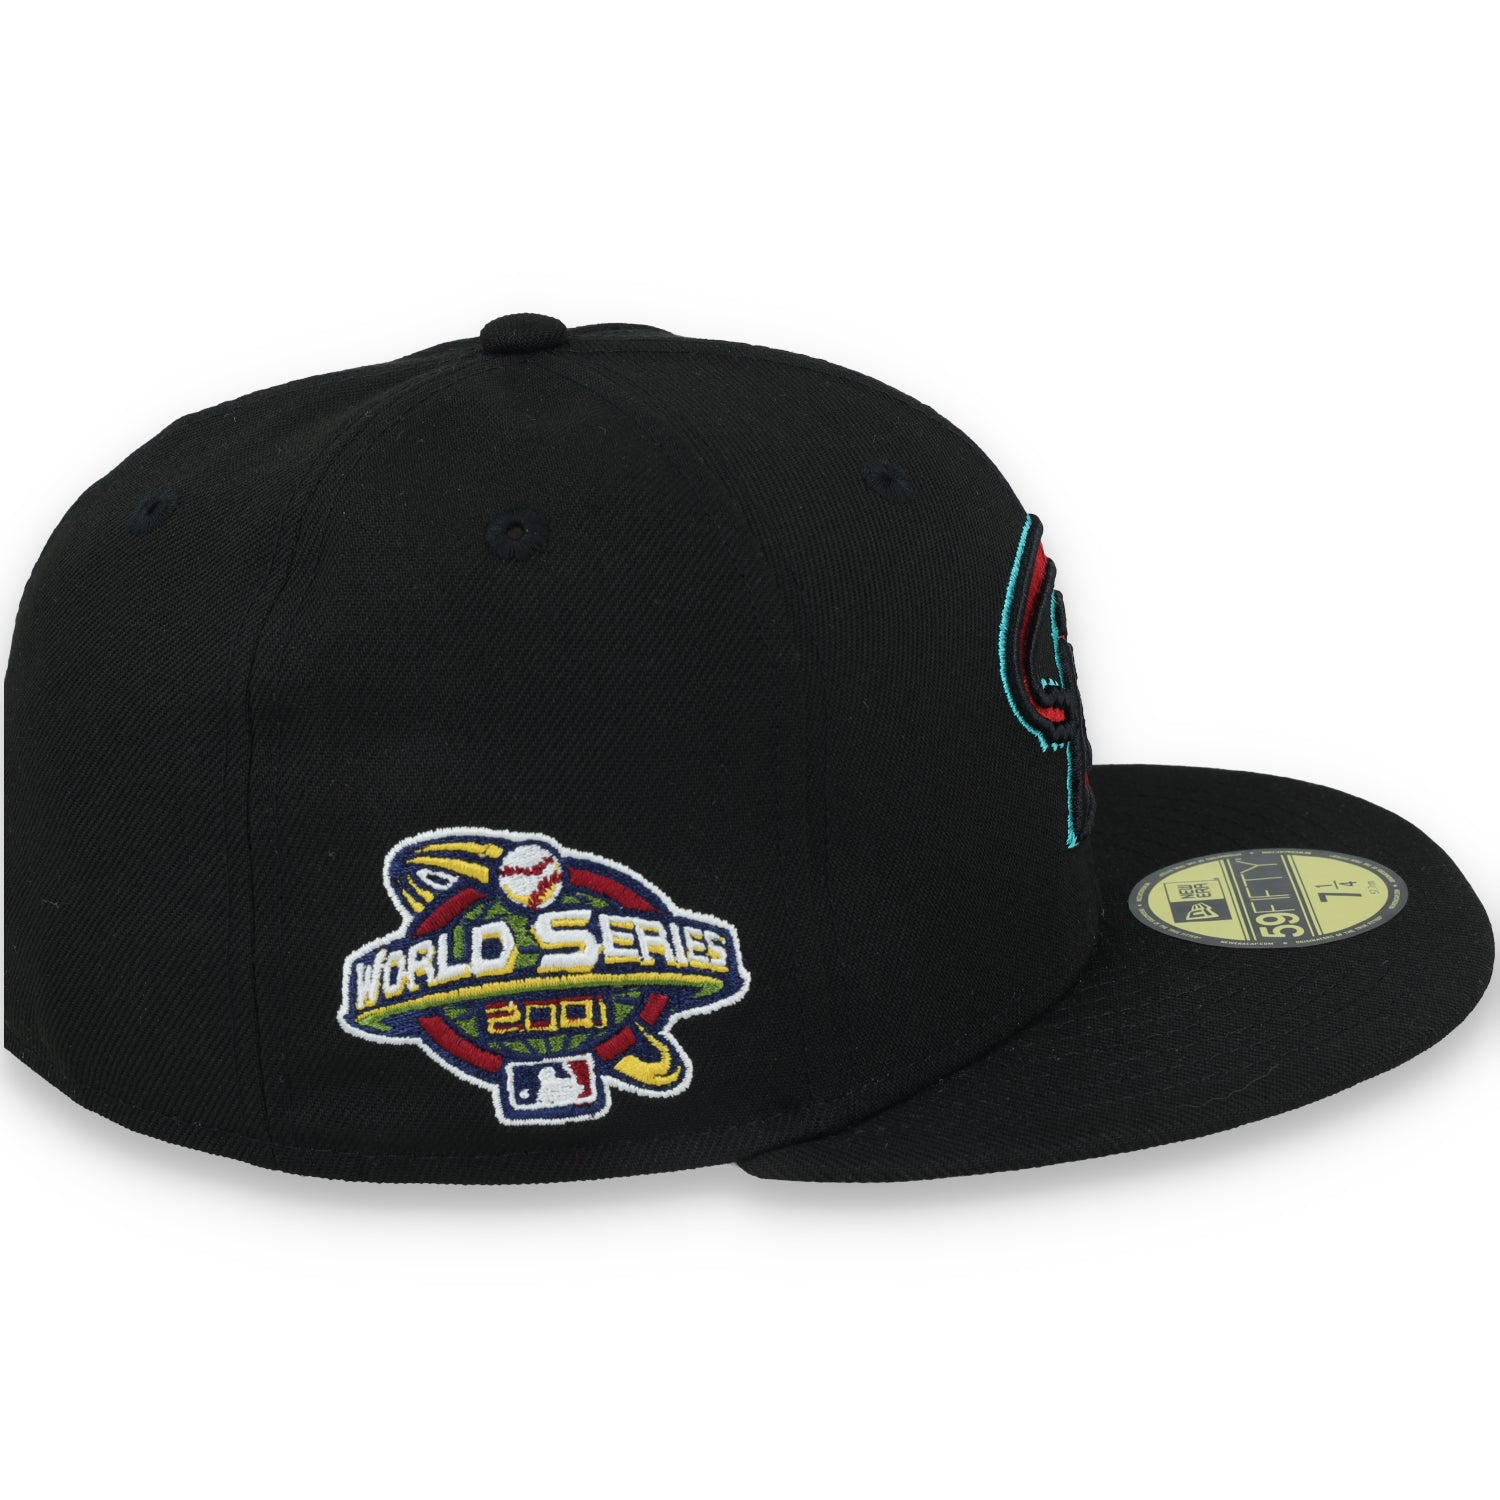 New Era Arizona Diamondbacks World Series 2001 59FIFTY Fitted Hat